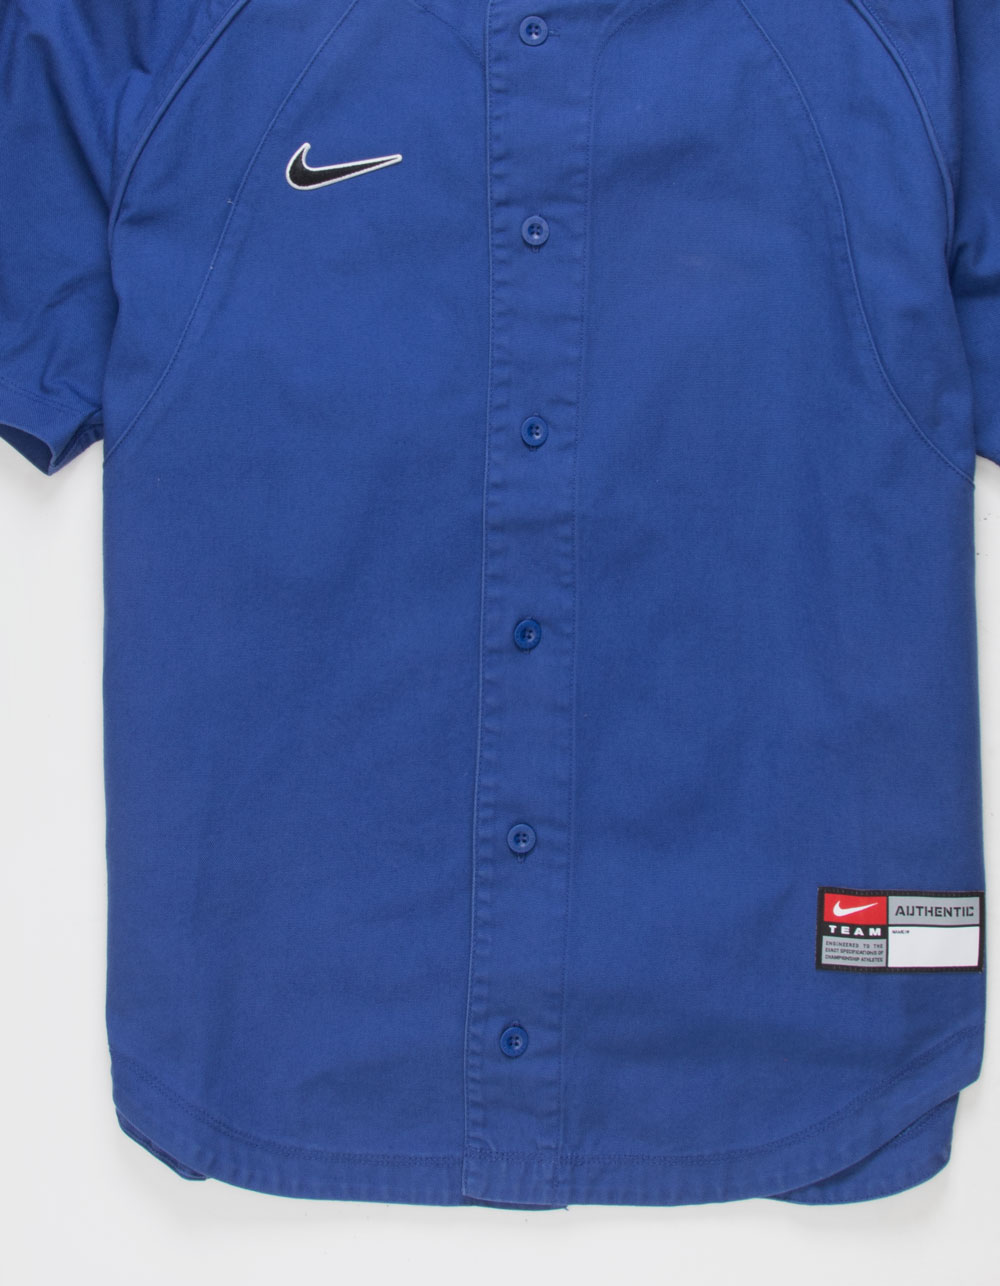 Nike SB x MLB Skate Baseball Jersey Deep Royal Blue/White DQ6282-455 Sz M  $125